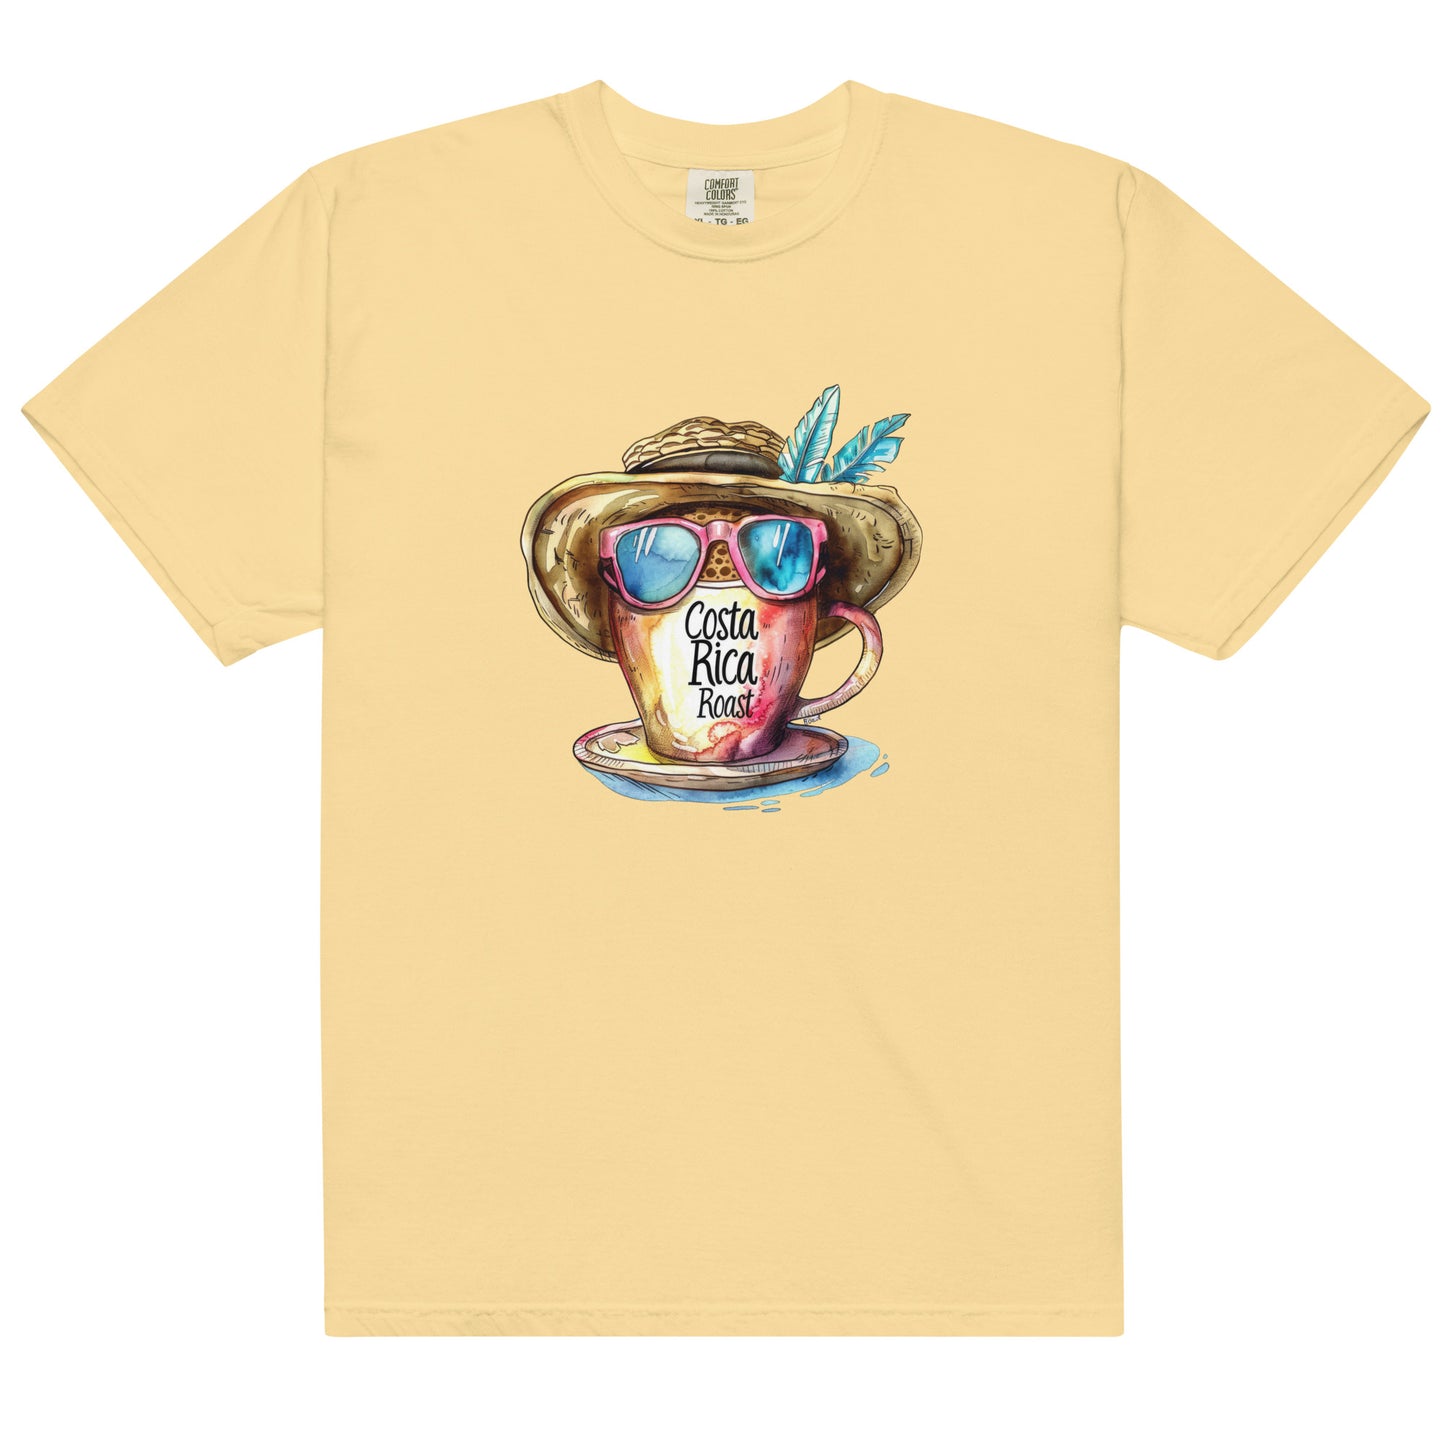 Costa Rica Coffee Roast t-shirt - Unisex